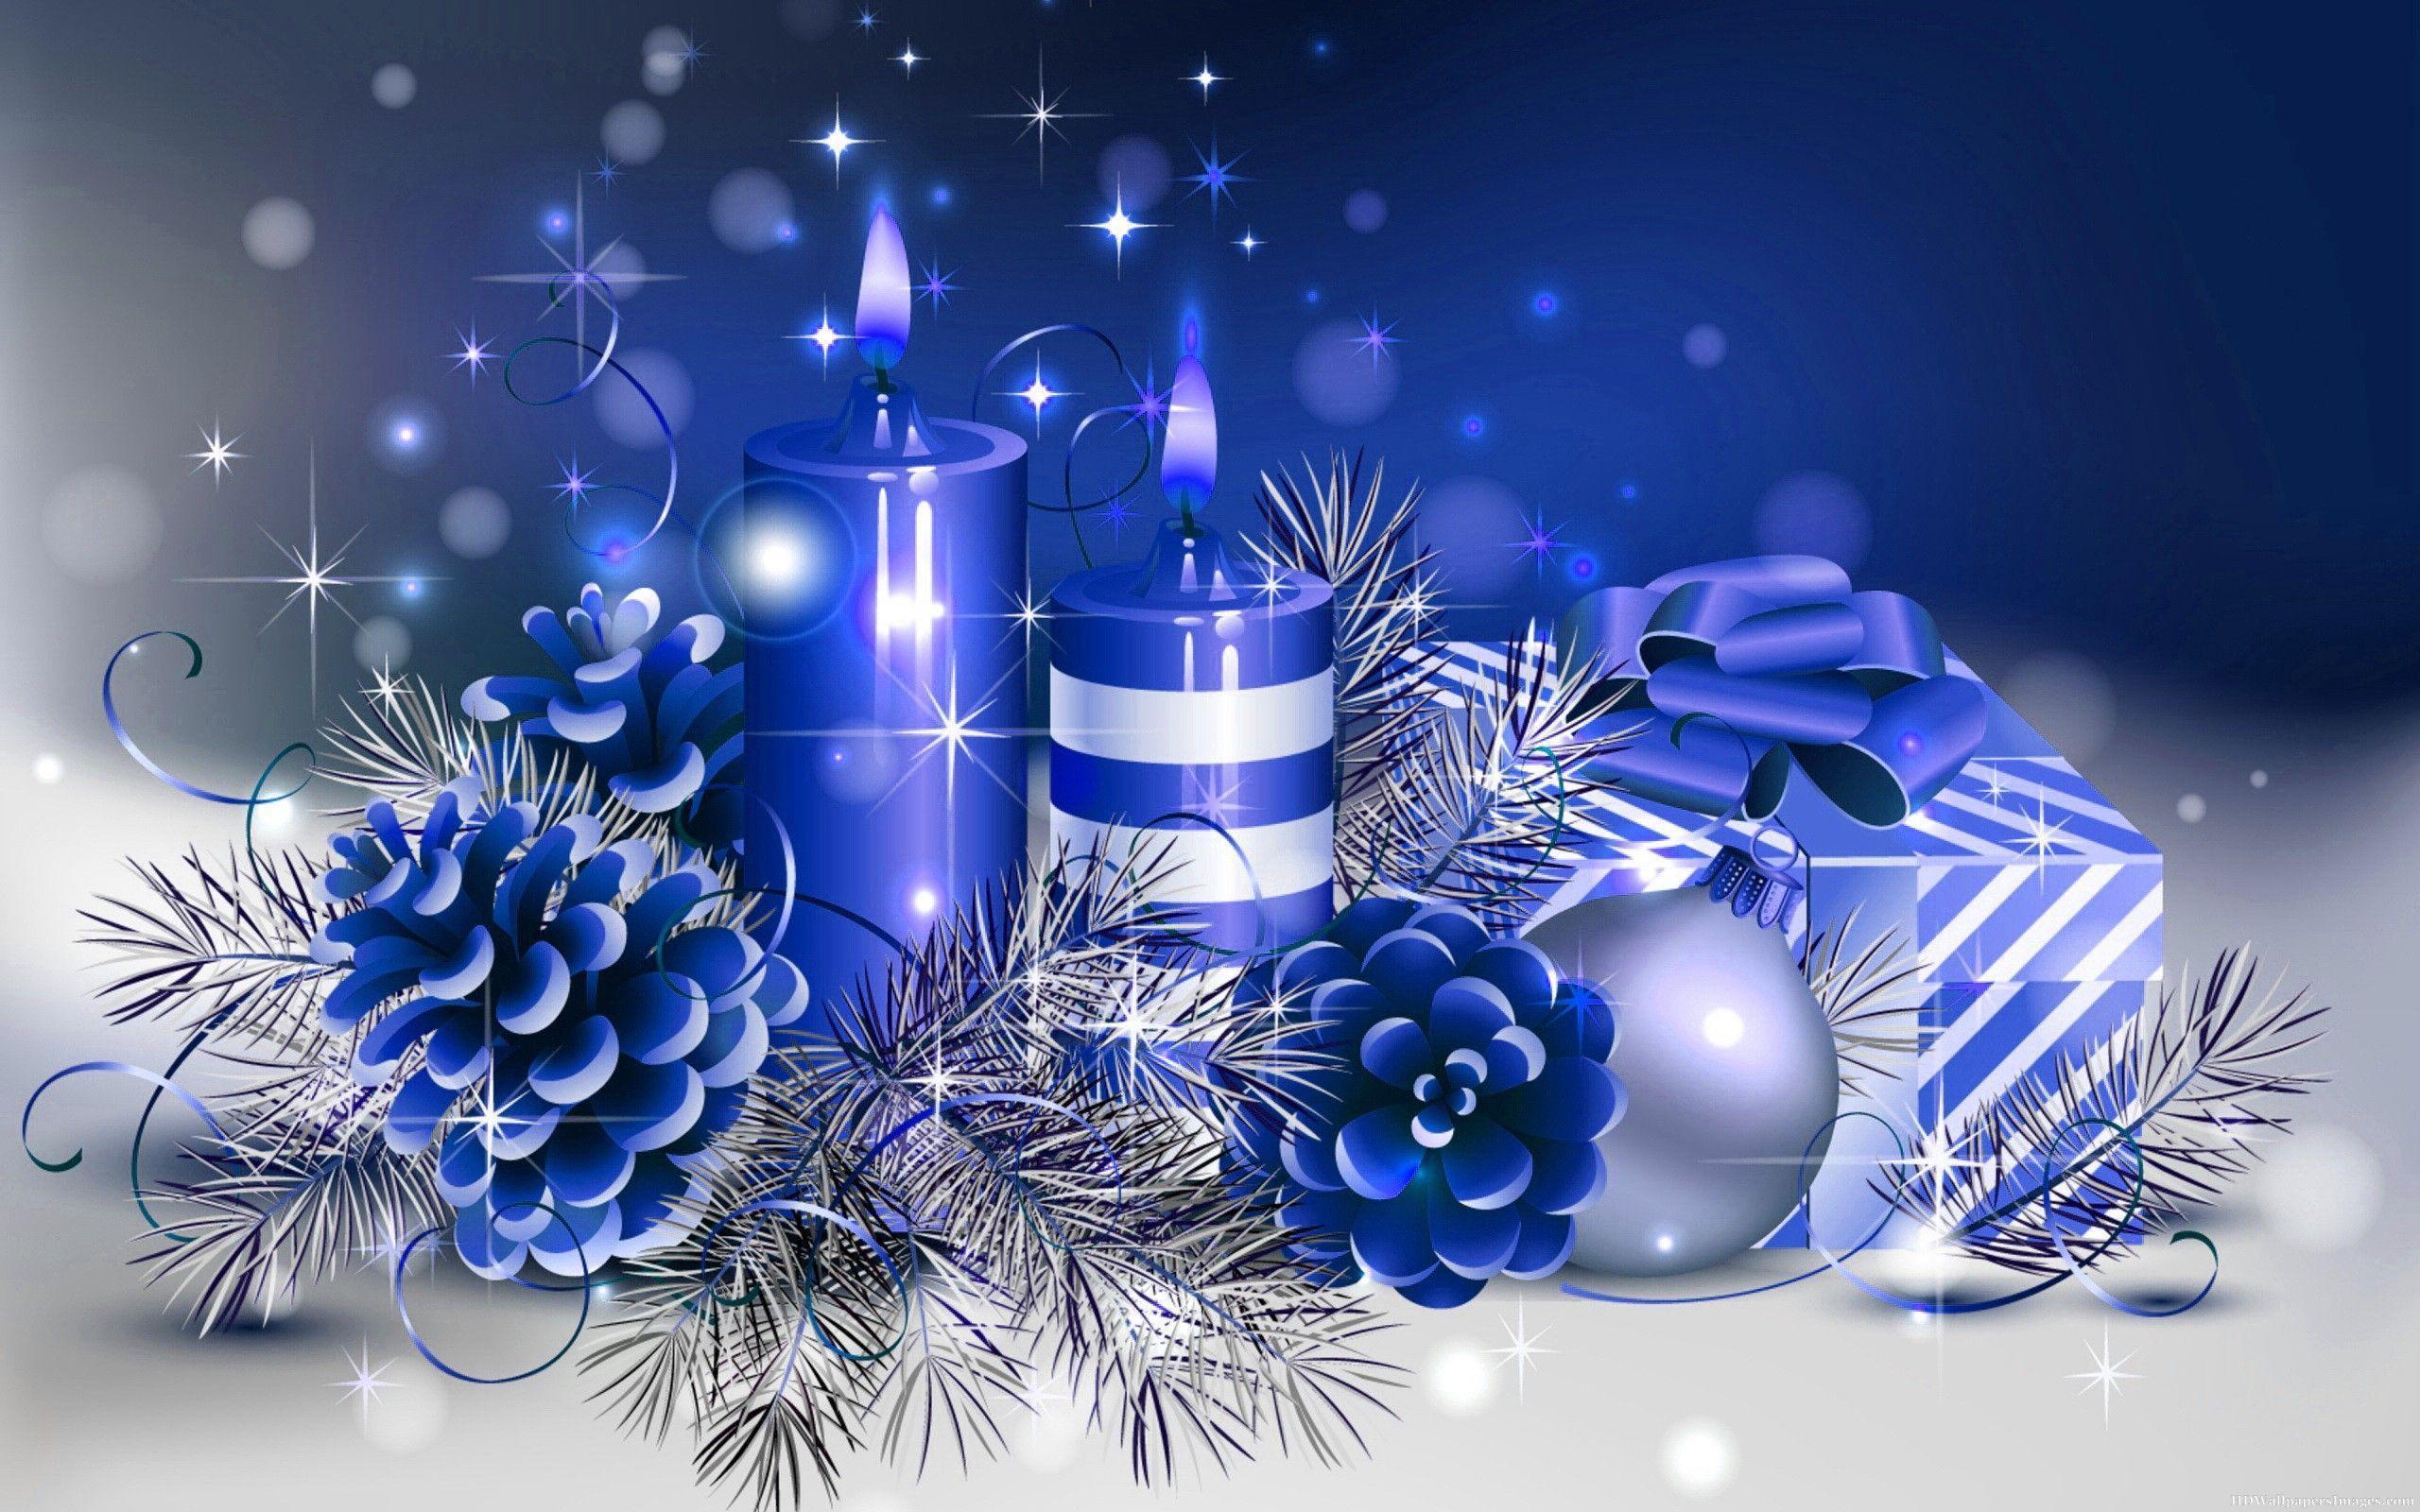 Blue ornaments, christmas noel background desktop wallpaper image